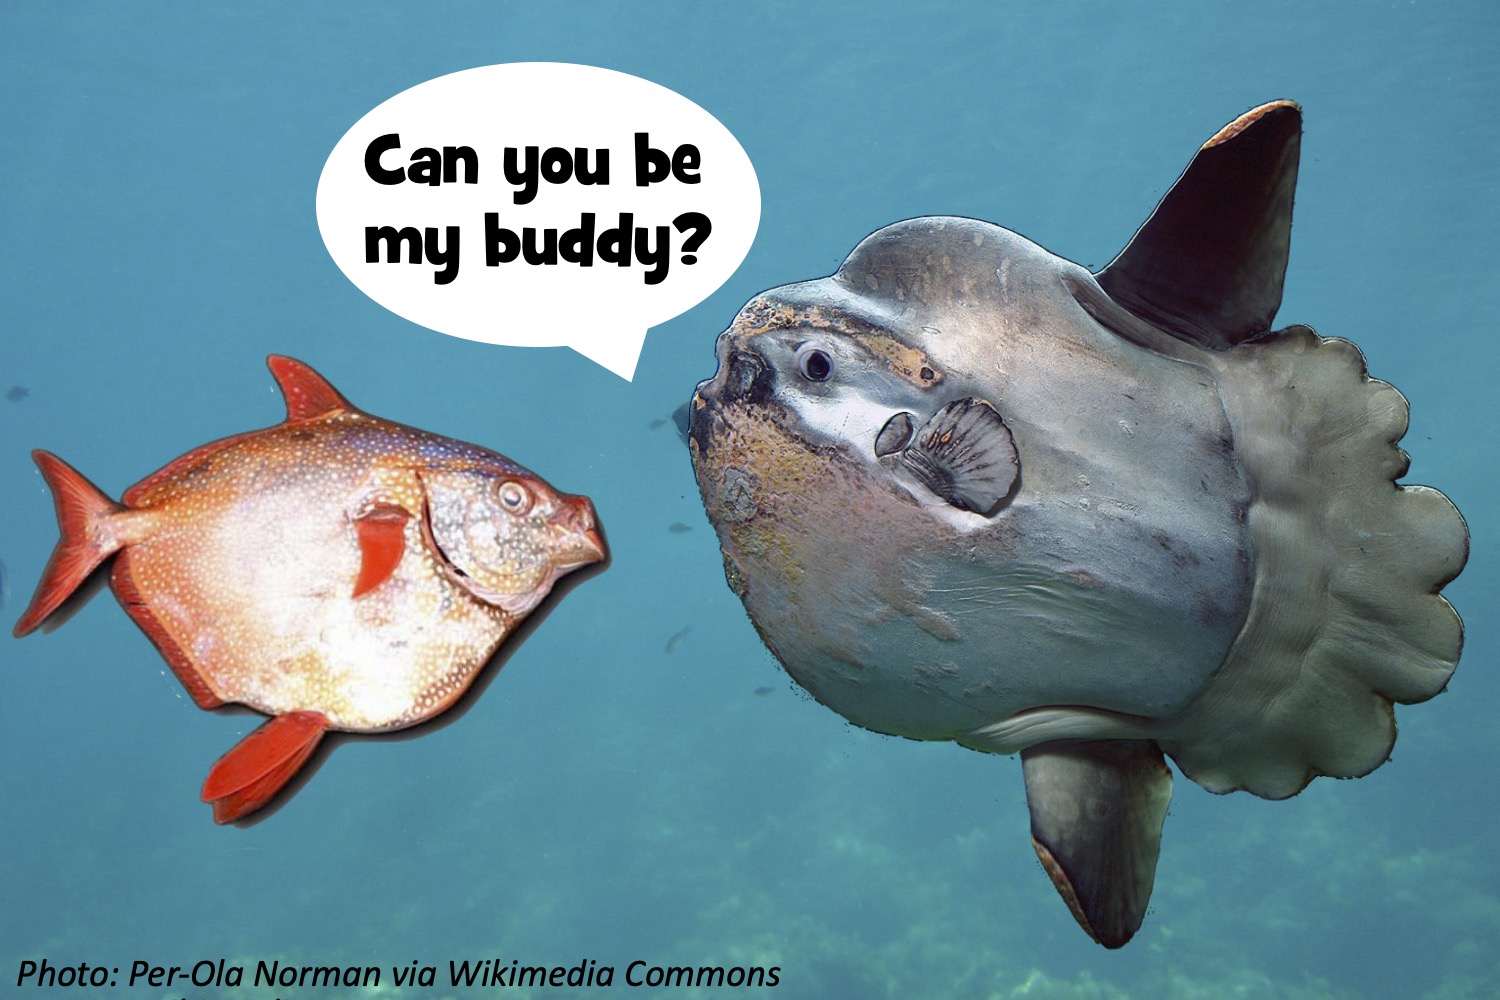 A Buddy for Sunfish – Bedtime Math